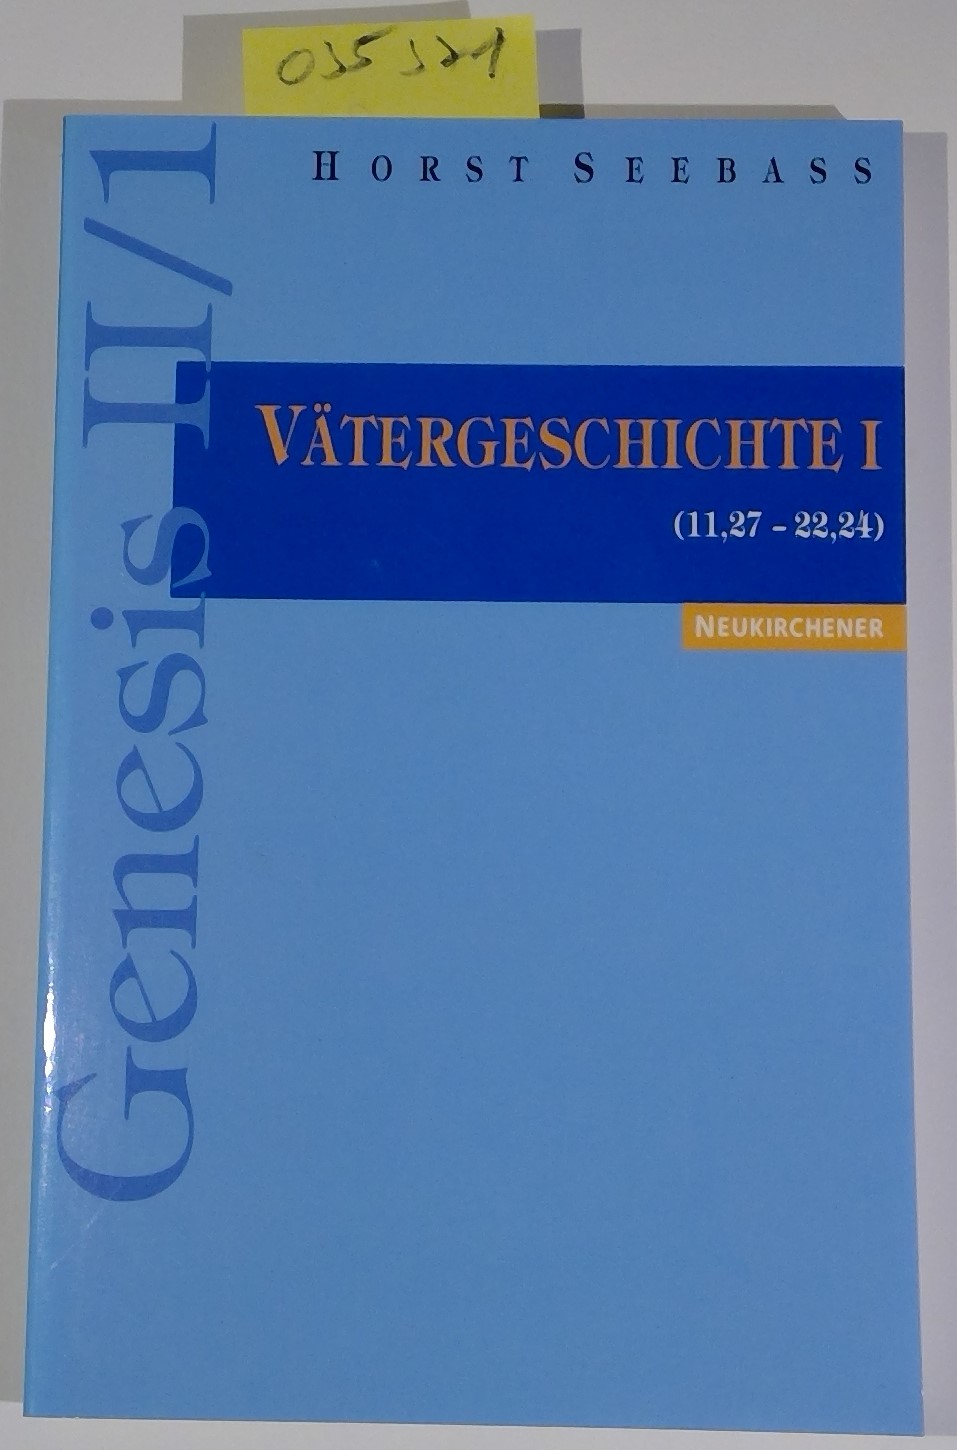 Vätergeschichte I (11,27 - 22,24), Genesis II/1 - Seebass, Horst